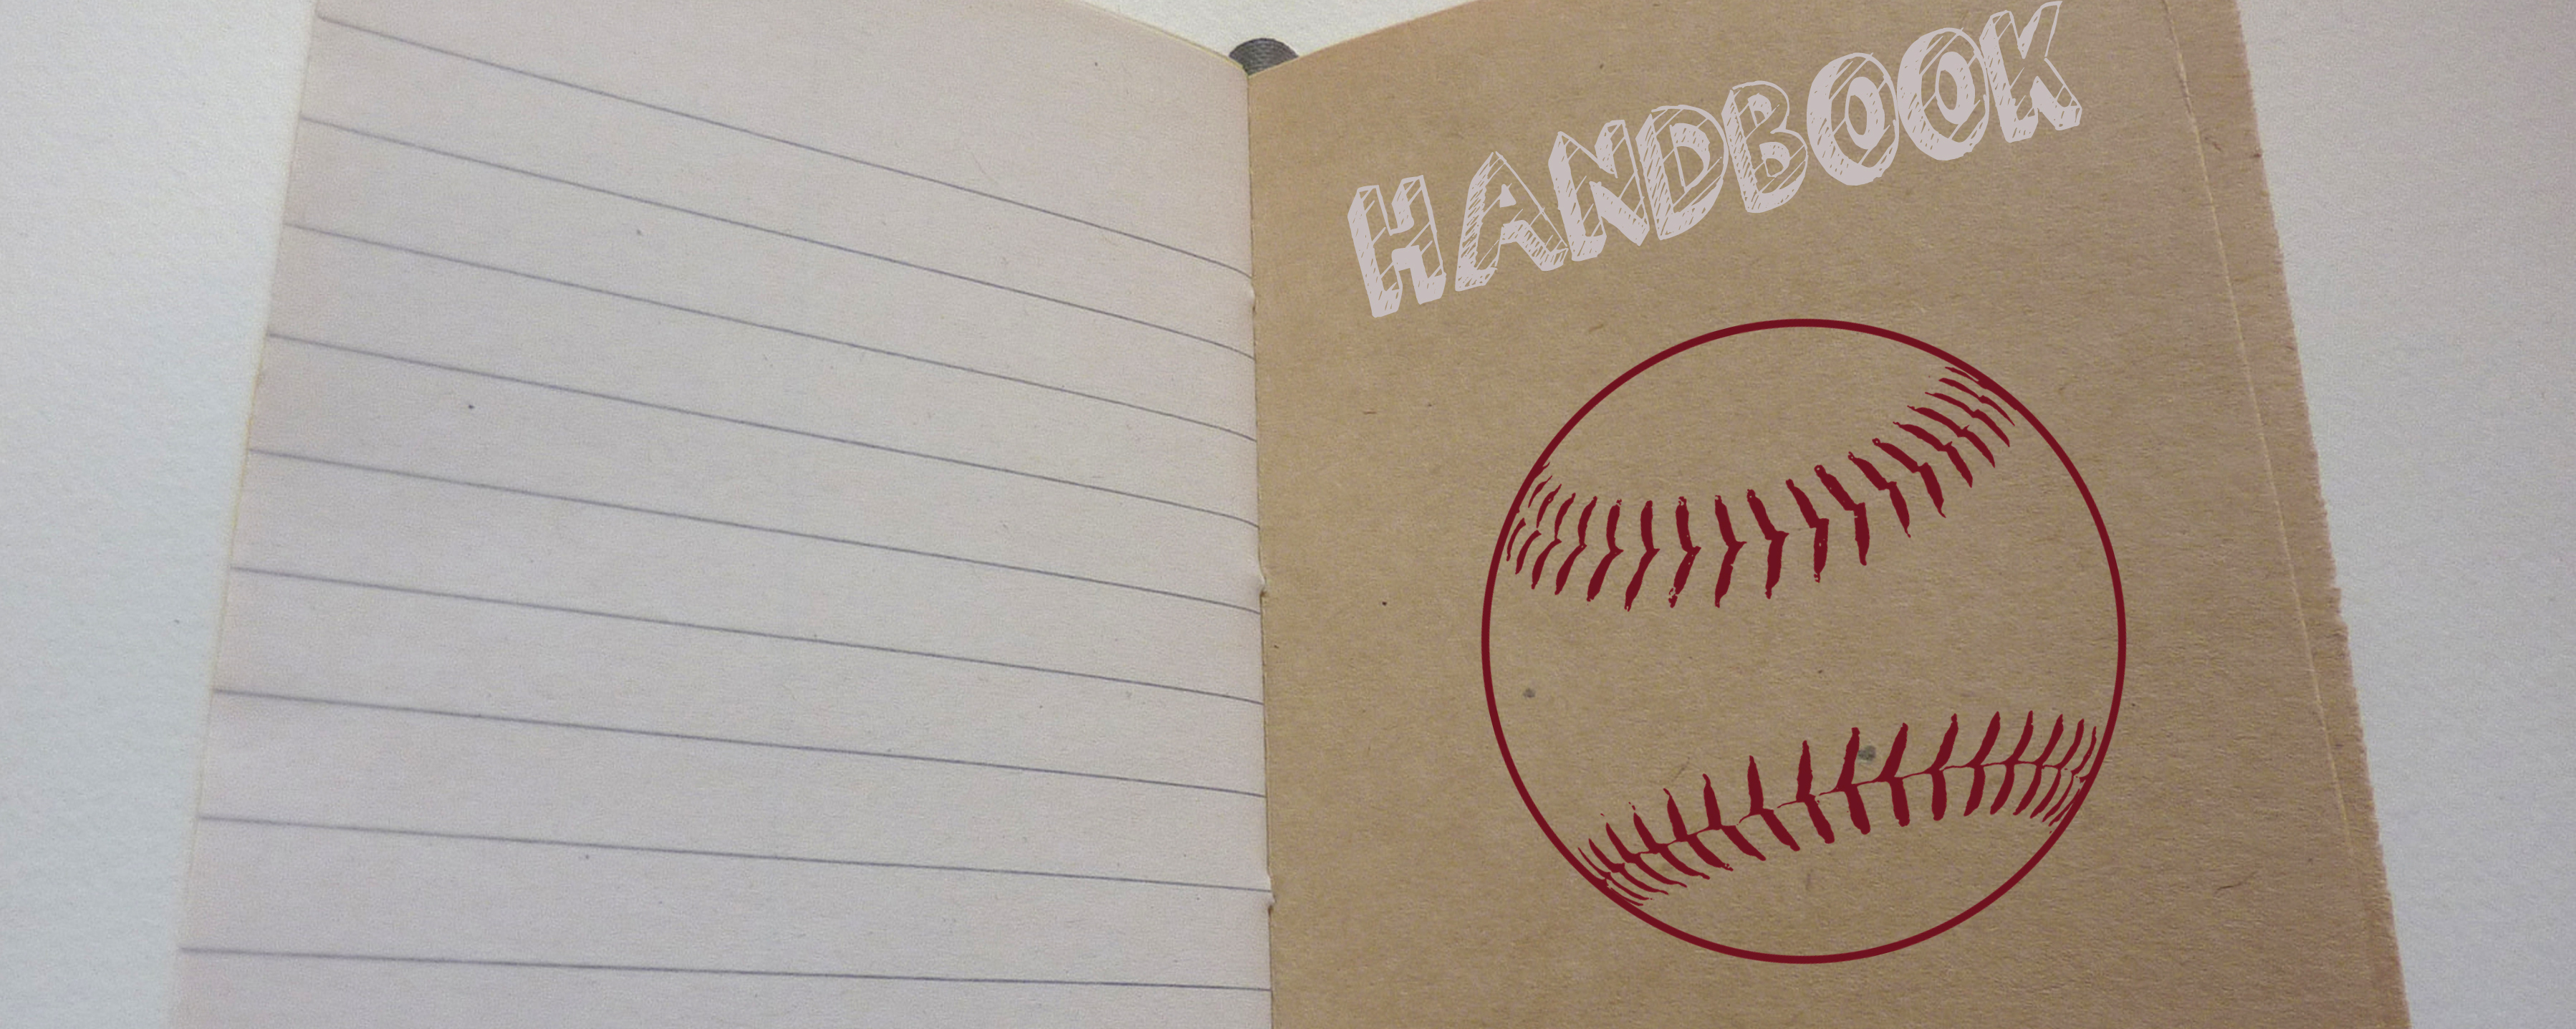 baseball handbook banner lighter